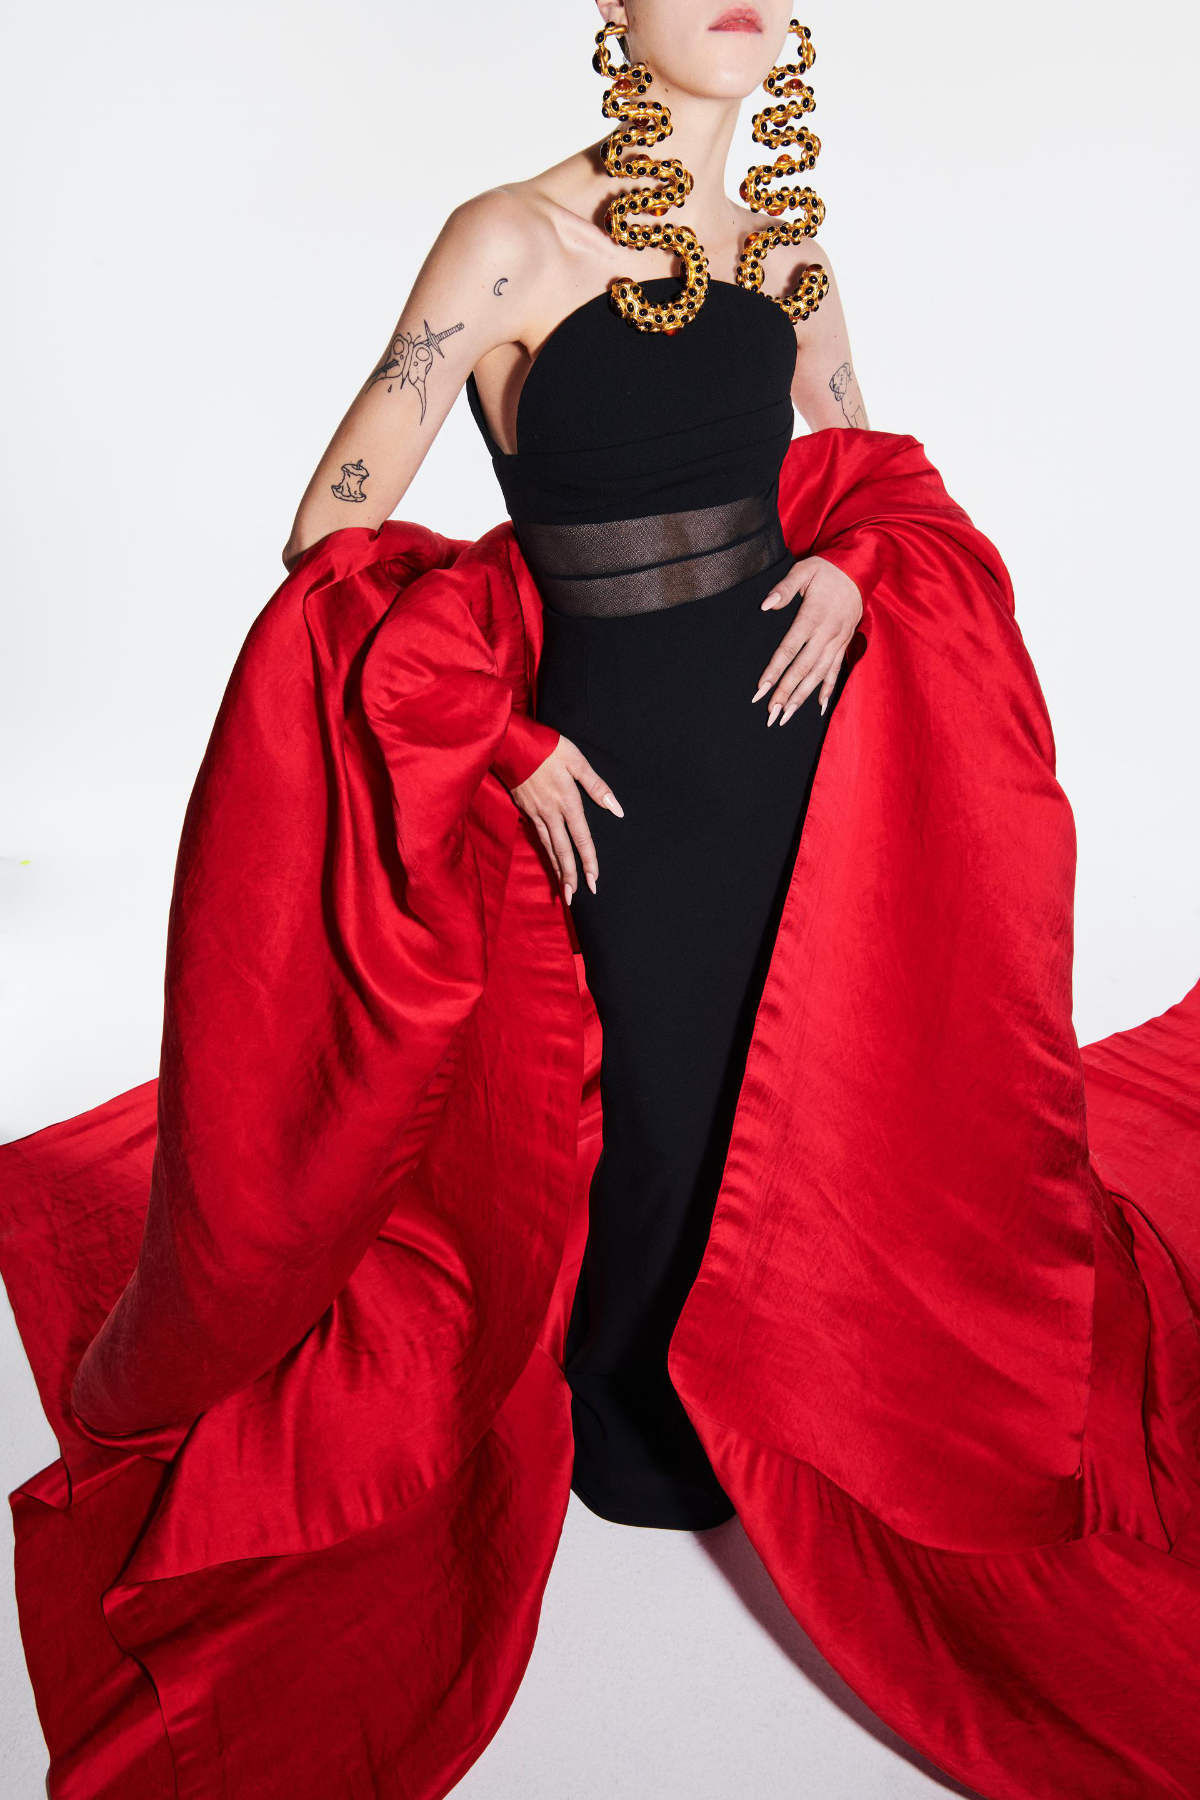 Cynthia Erivo Wore Schiaparelli Haute Couture To The Premiere Of “Genius: Aretha”